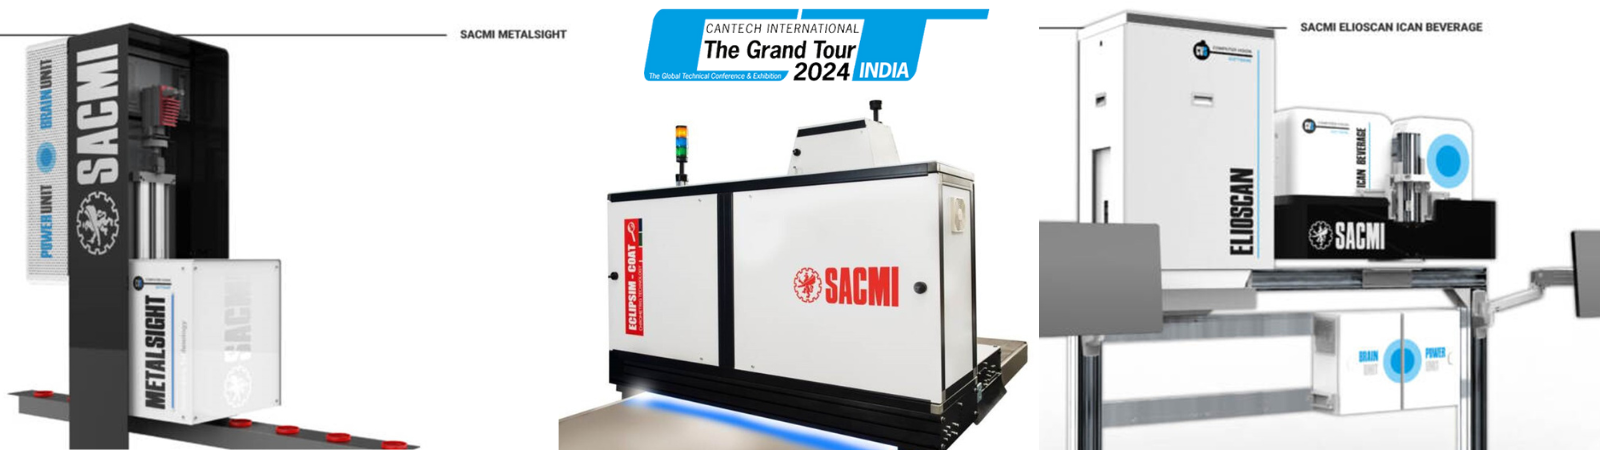 SACMI @ CANTECH THE GRAND TOUR 2024